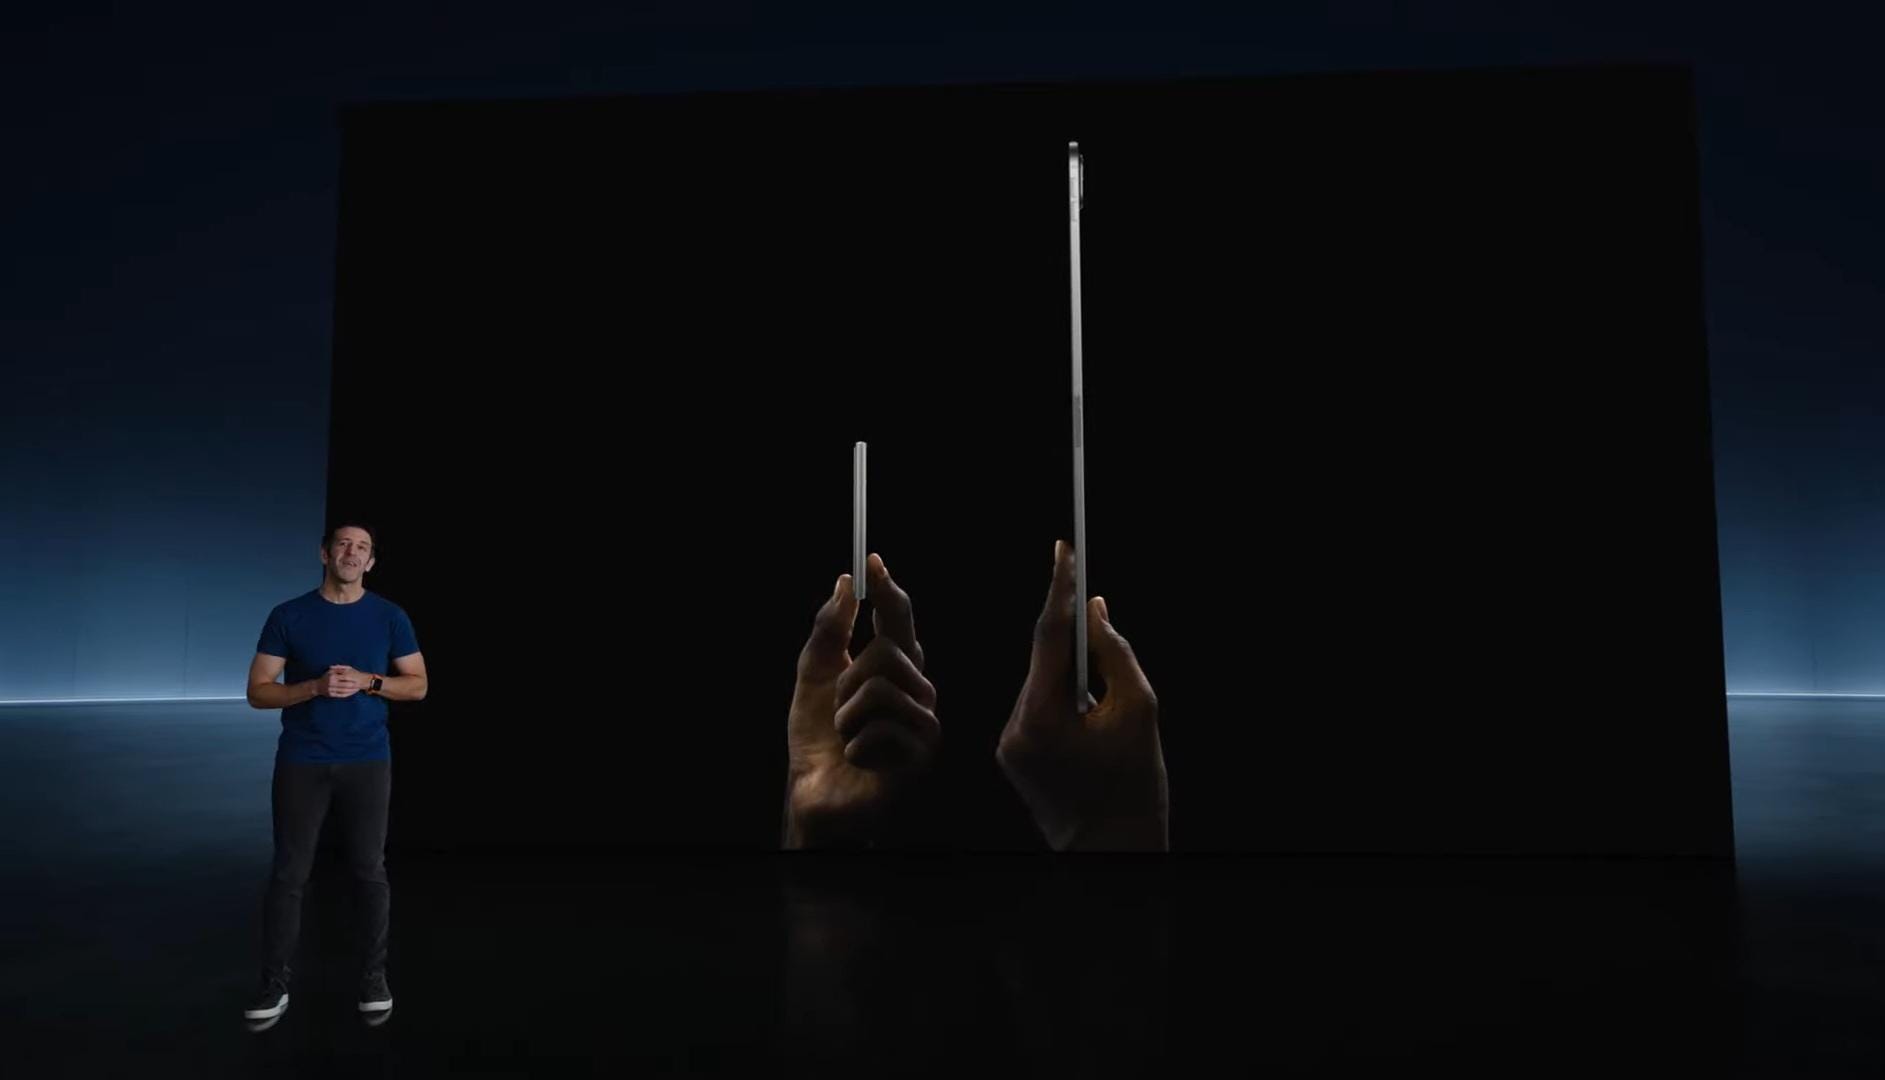 apple event live updates: new ipad air, ipad pro, magic keyboard introduced